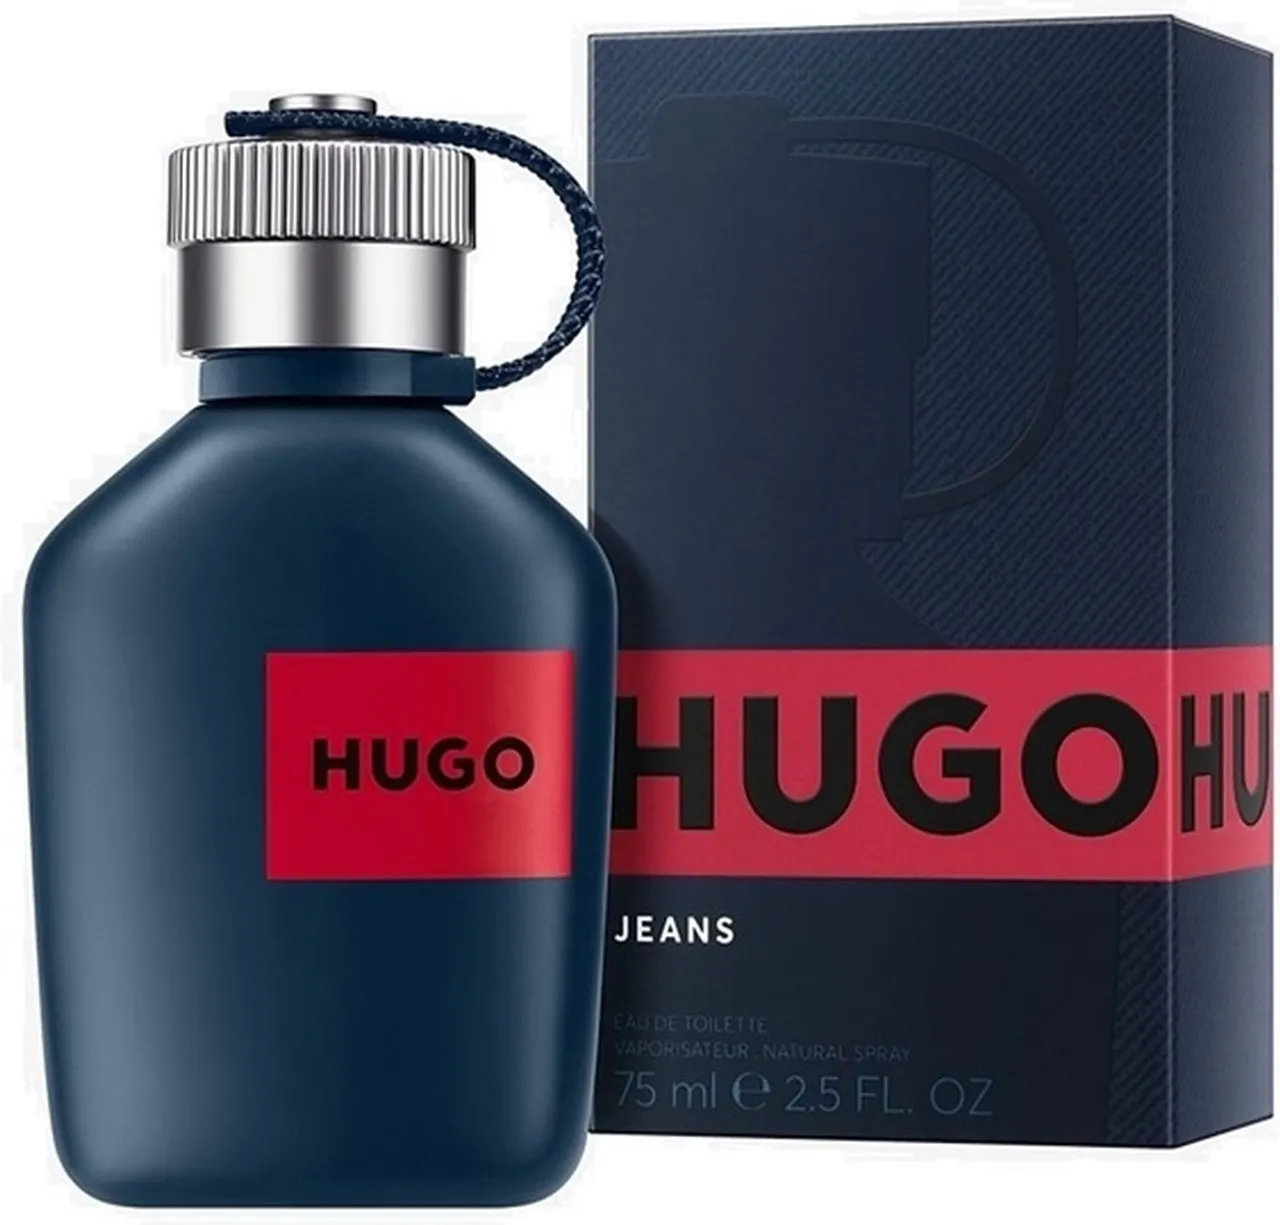 Hugo Jeans Eau de Toilette 75ml spray